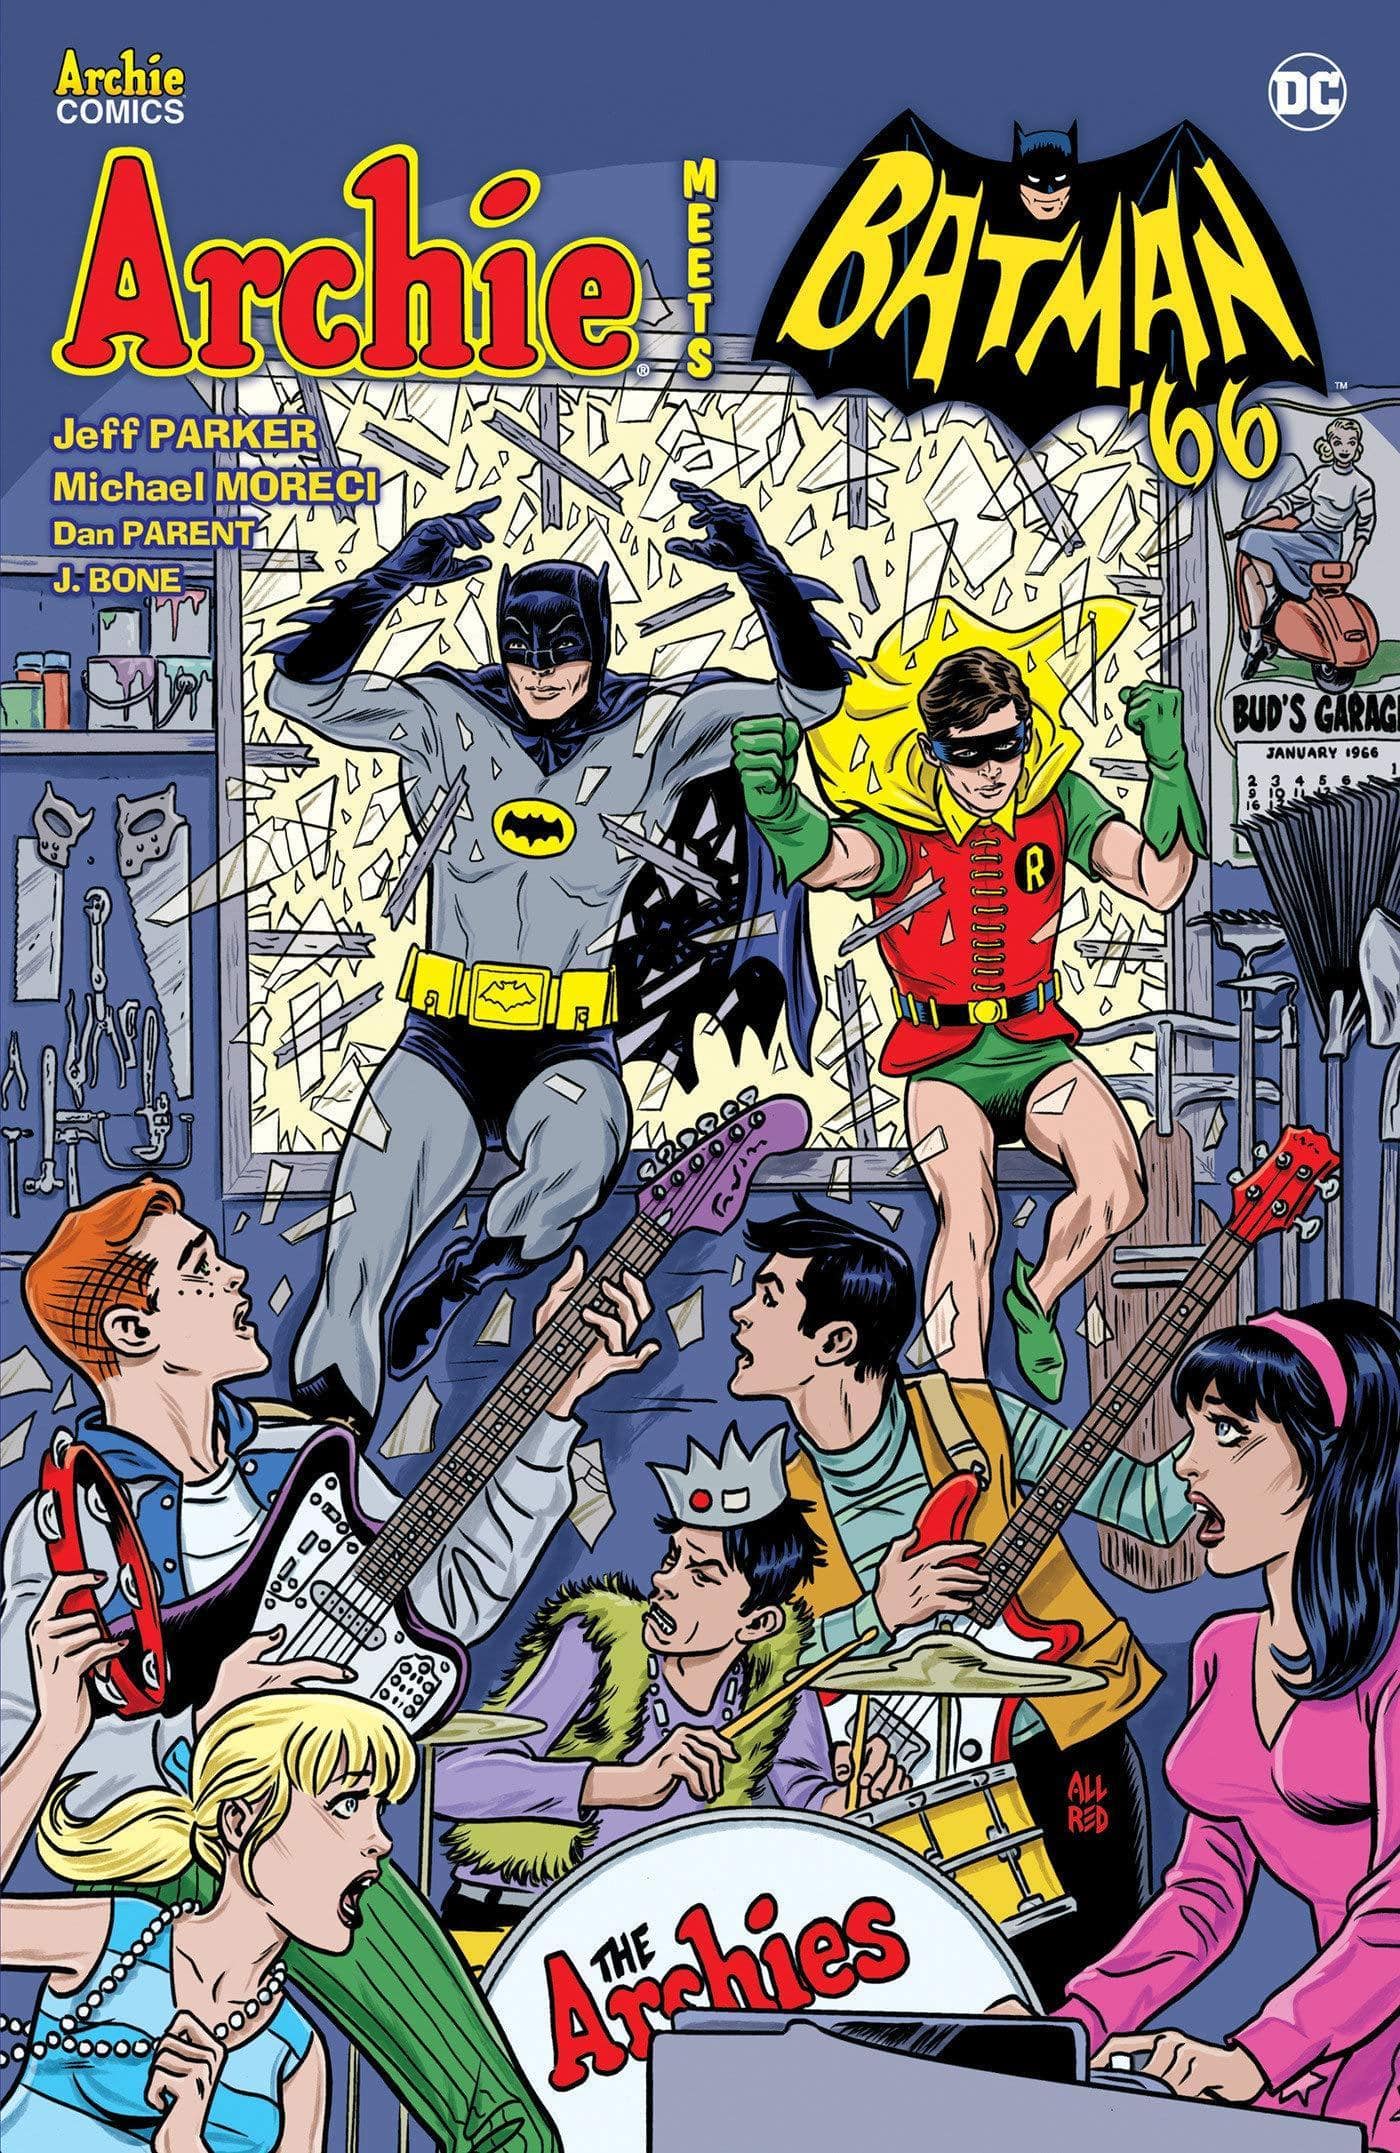 Archie Meets Batman ཾ - SureShot Books Publishing LLC